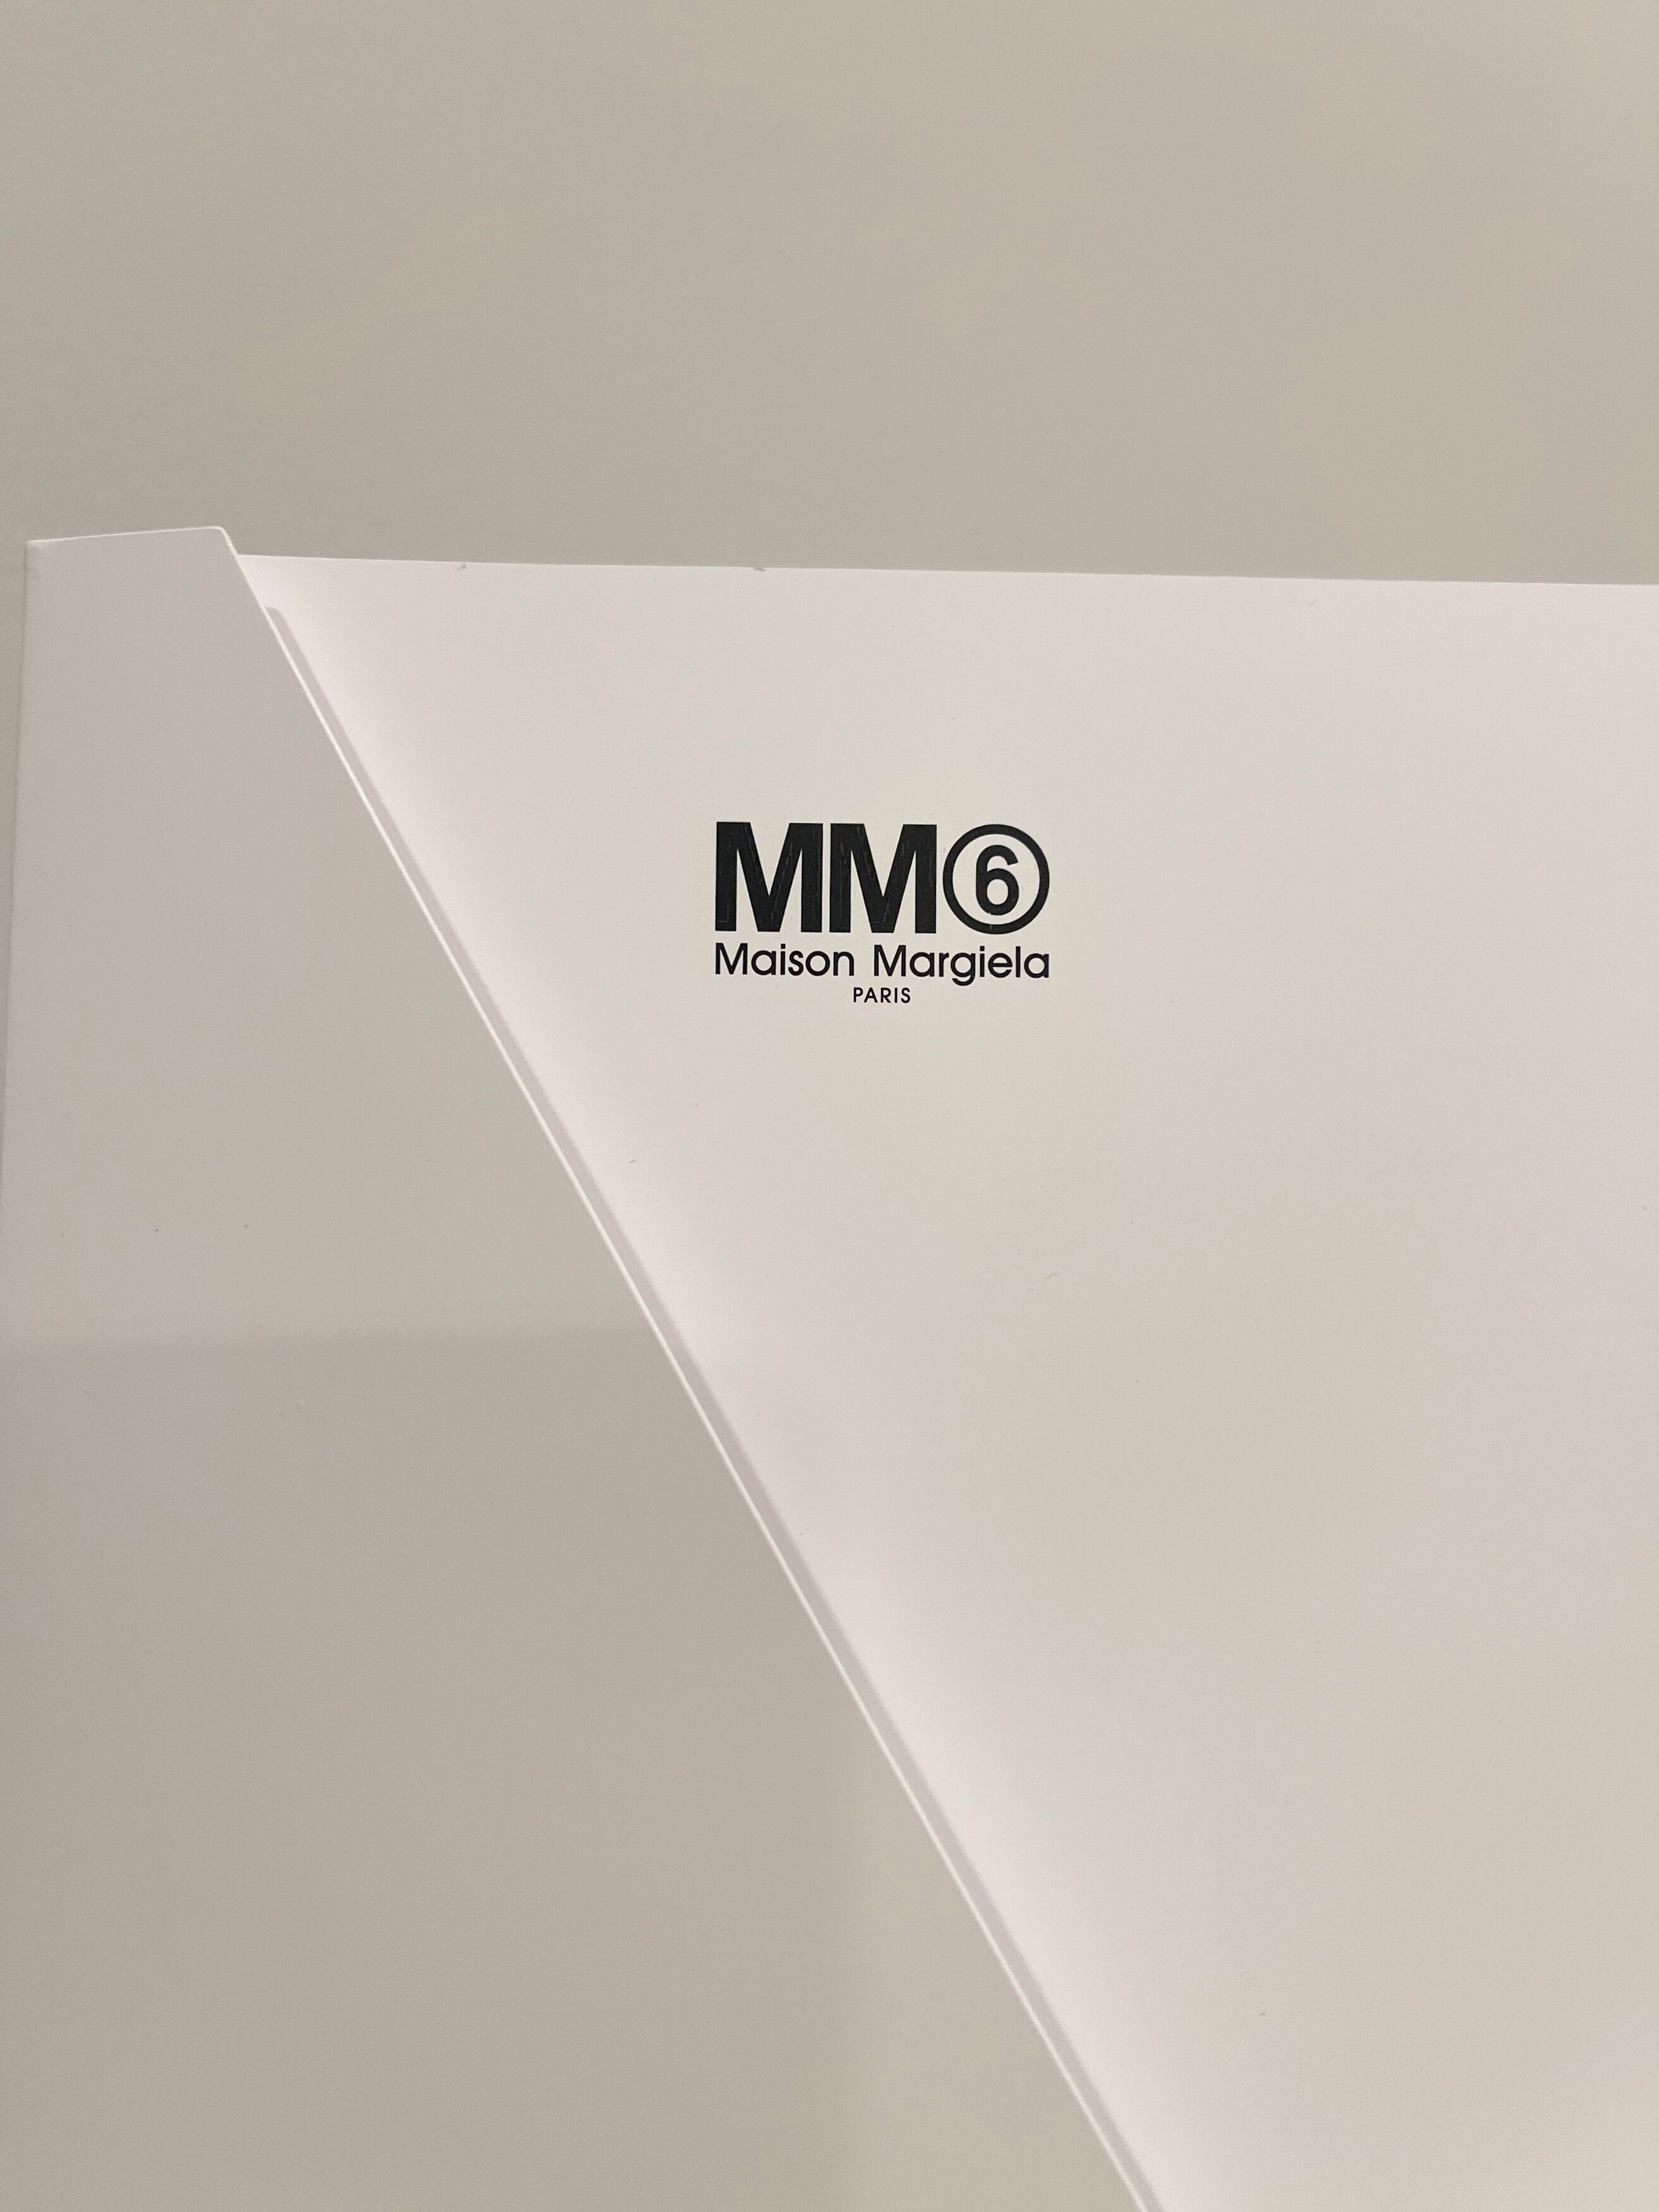 MM6 by Madison Margiela Small Paper Folder - 2